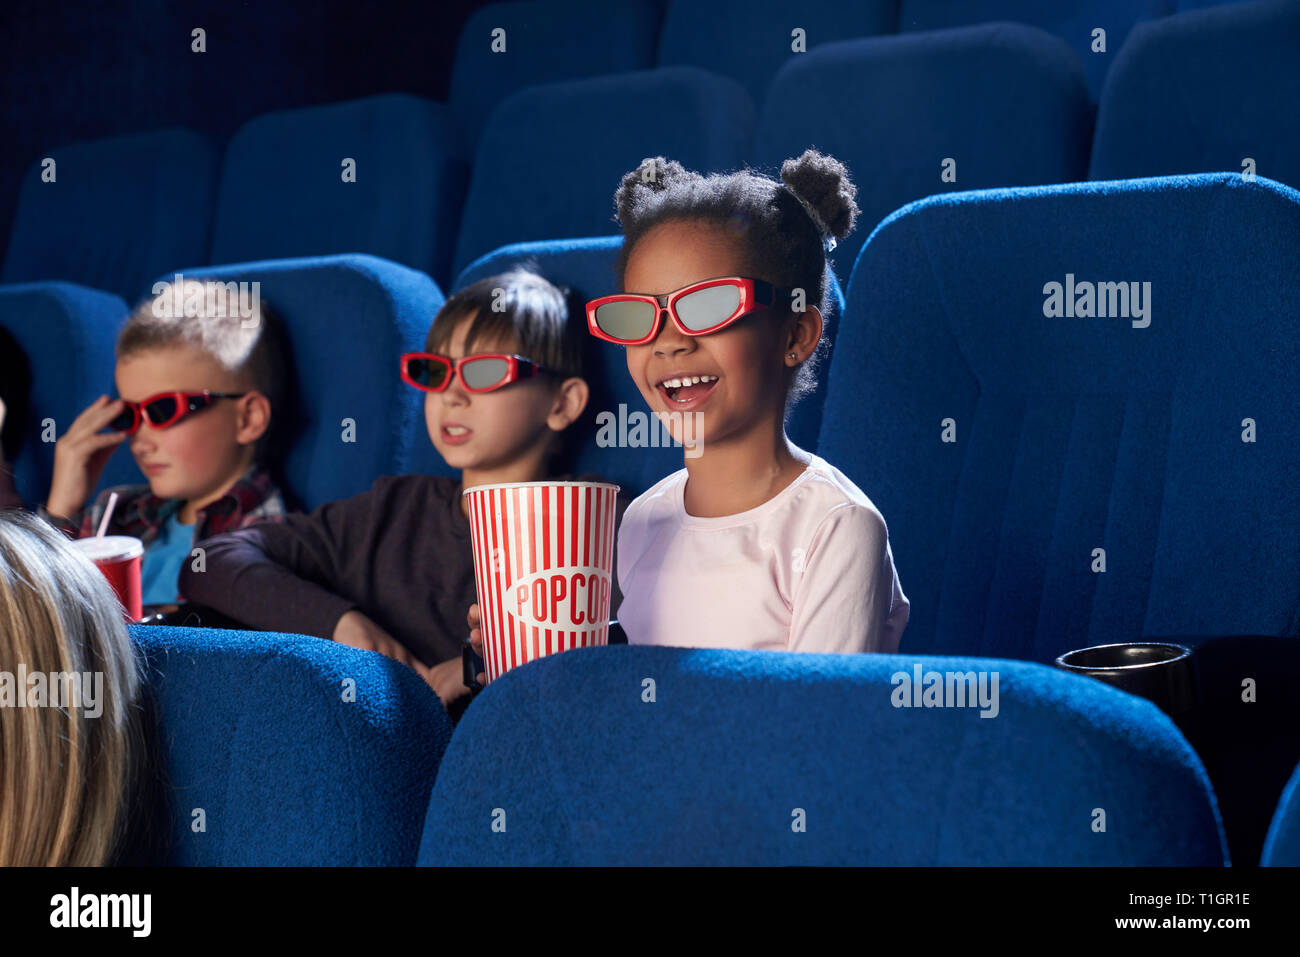 Cheerful, joyful children sitting in cinema theatre, enjoying movie or cartoon. Kids wearing in 3D glasses. Cute little girl smiling, holding popcorn bucket. Stock Photo